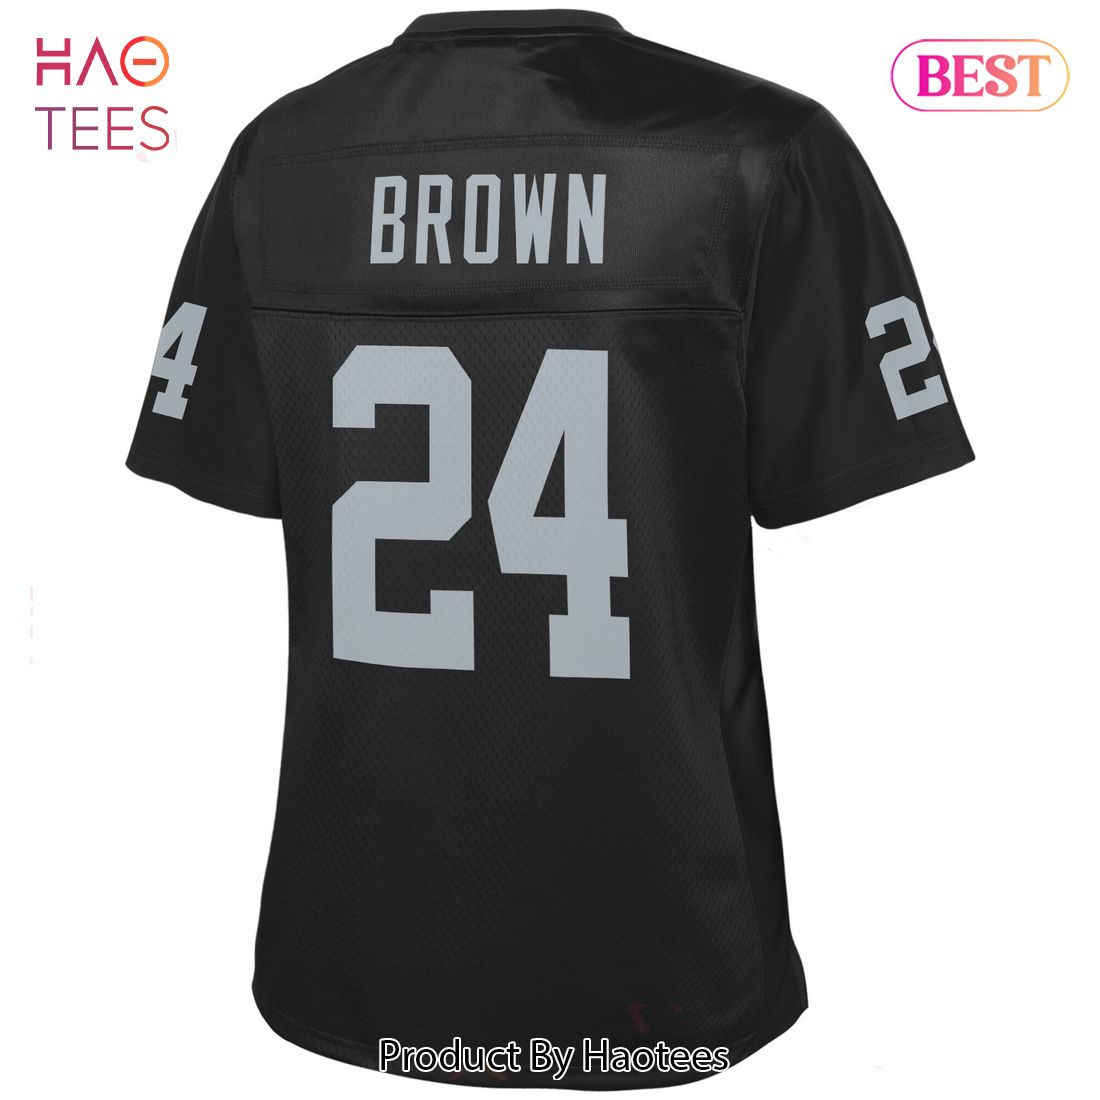 Tim Brown Las Vegas Raiders NFL Pro Line Women's Retired Player Jersey Black